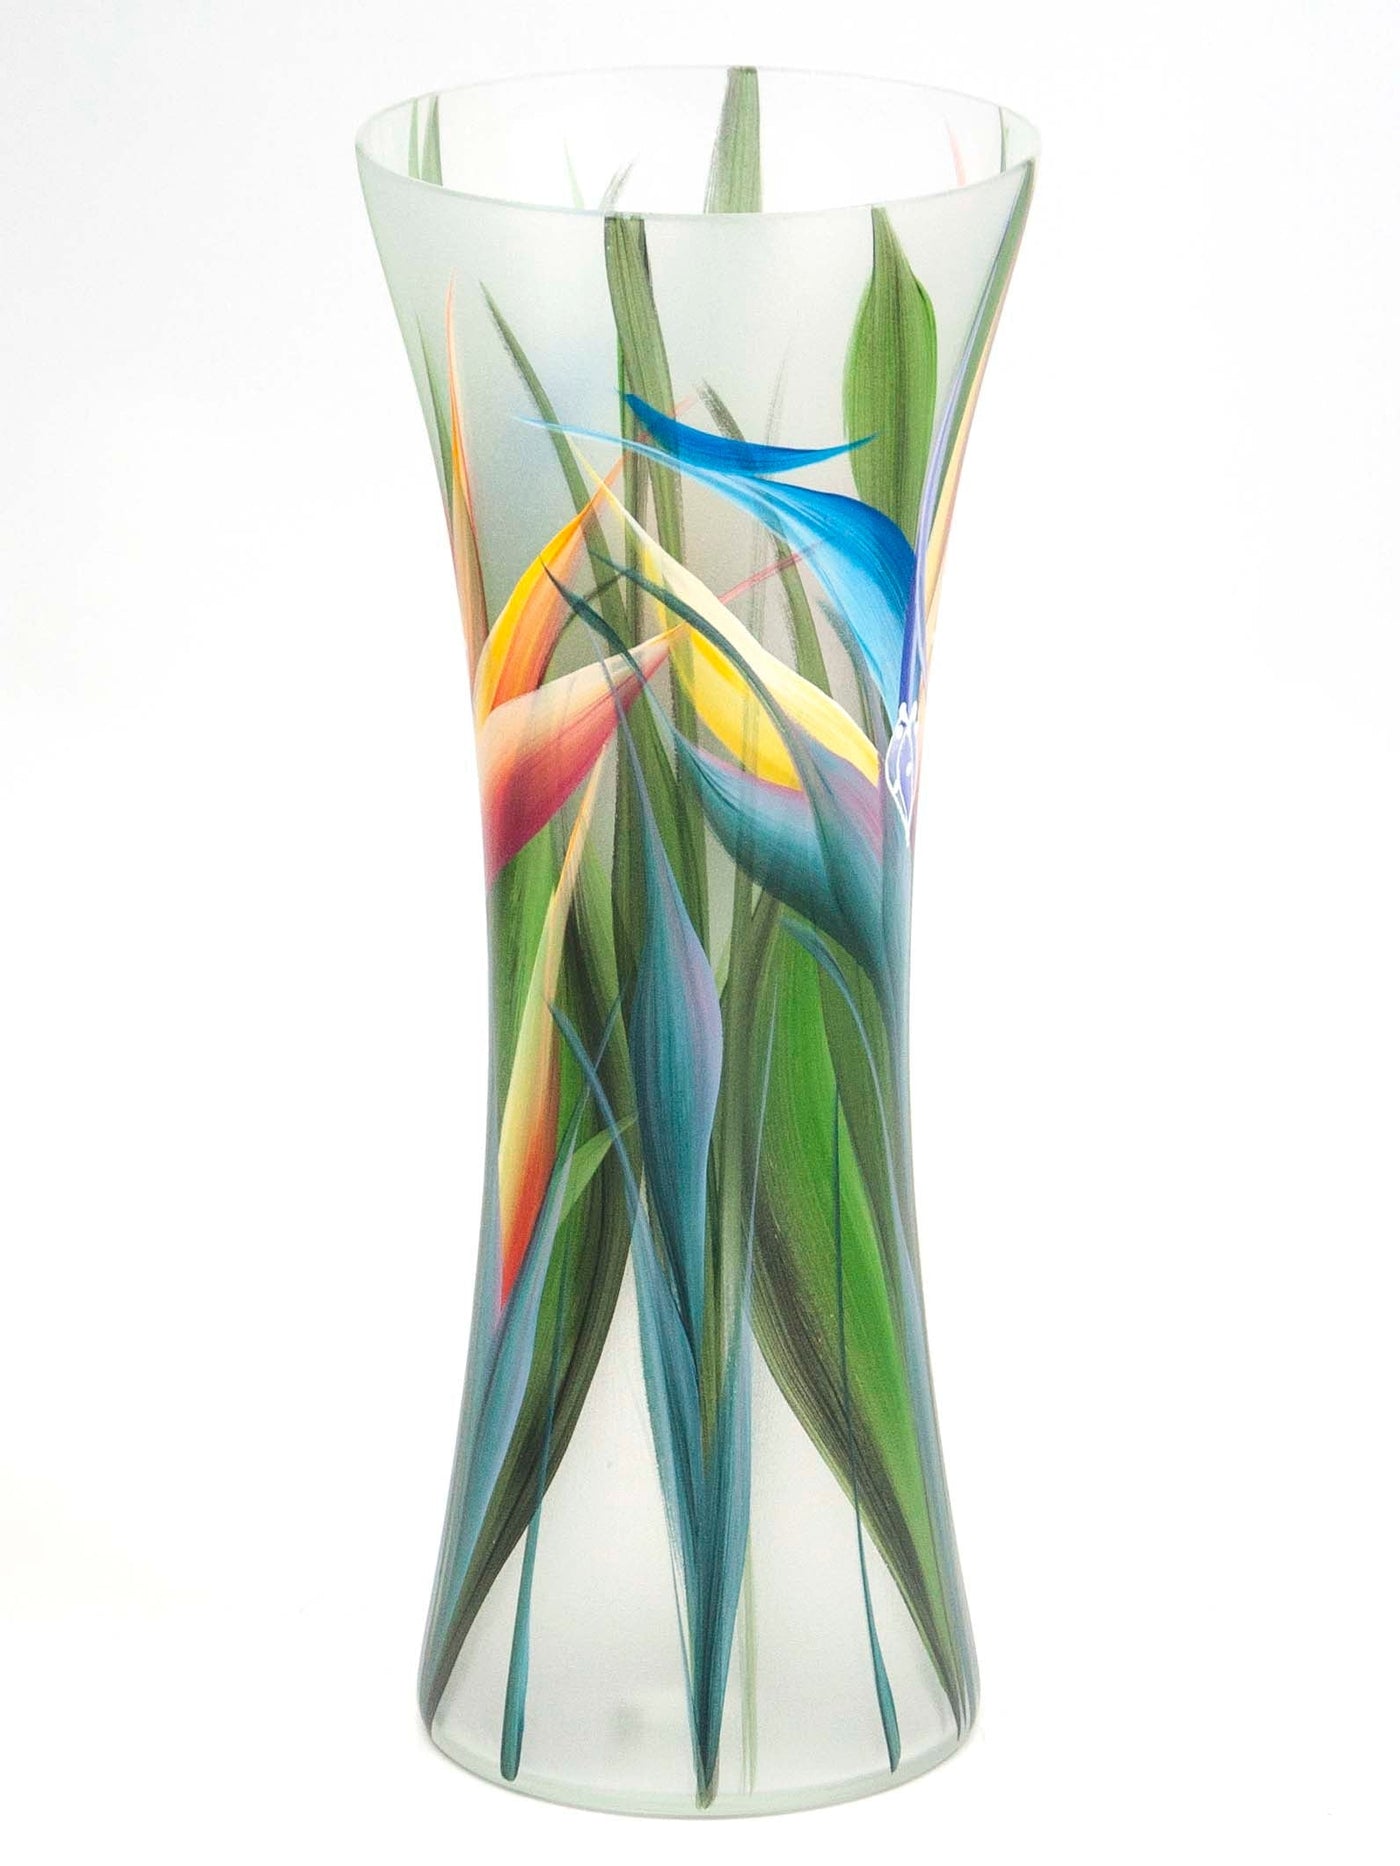 Floor green art Decorative Glass Vase